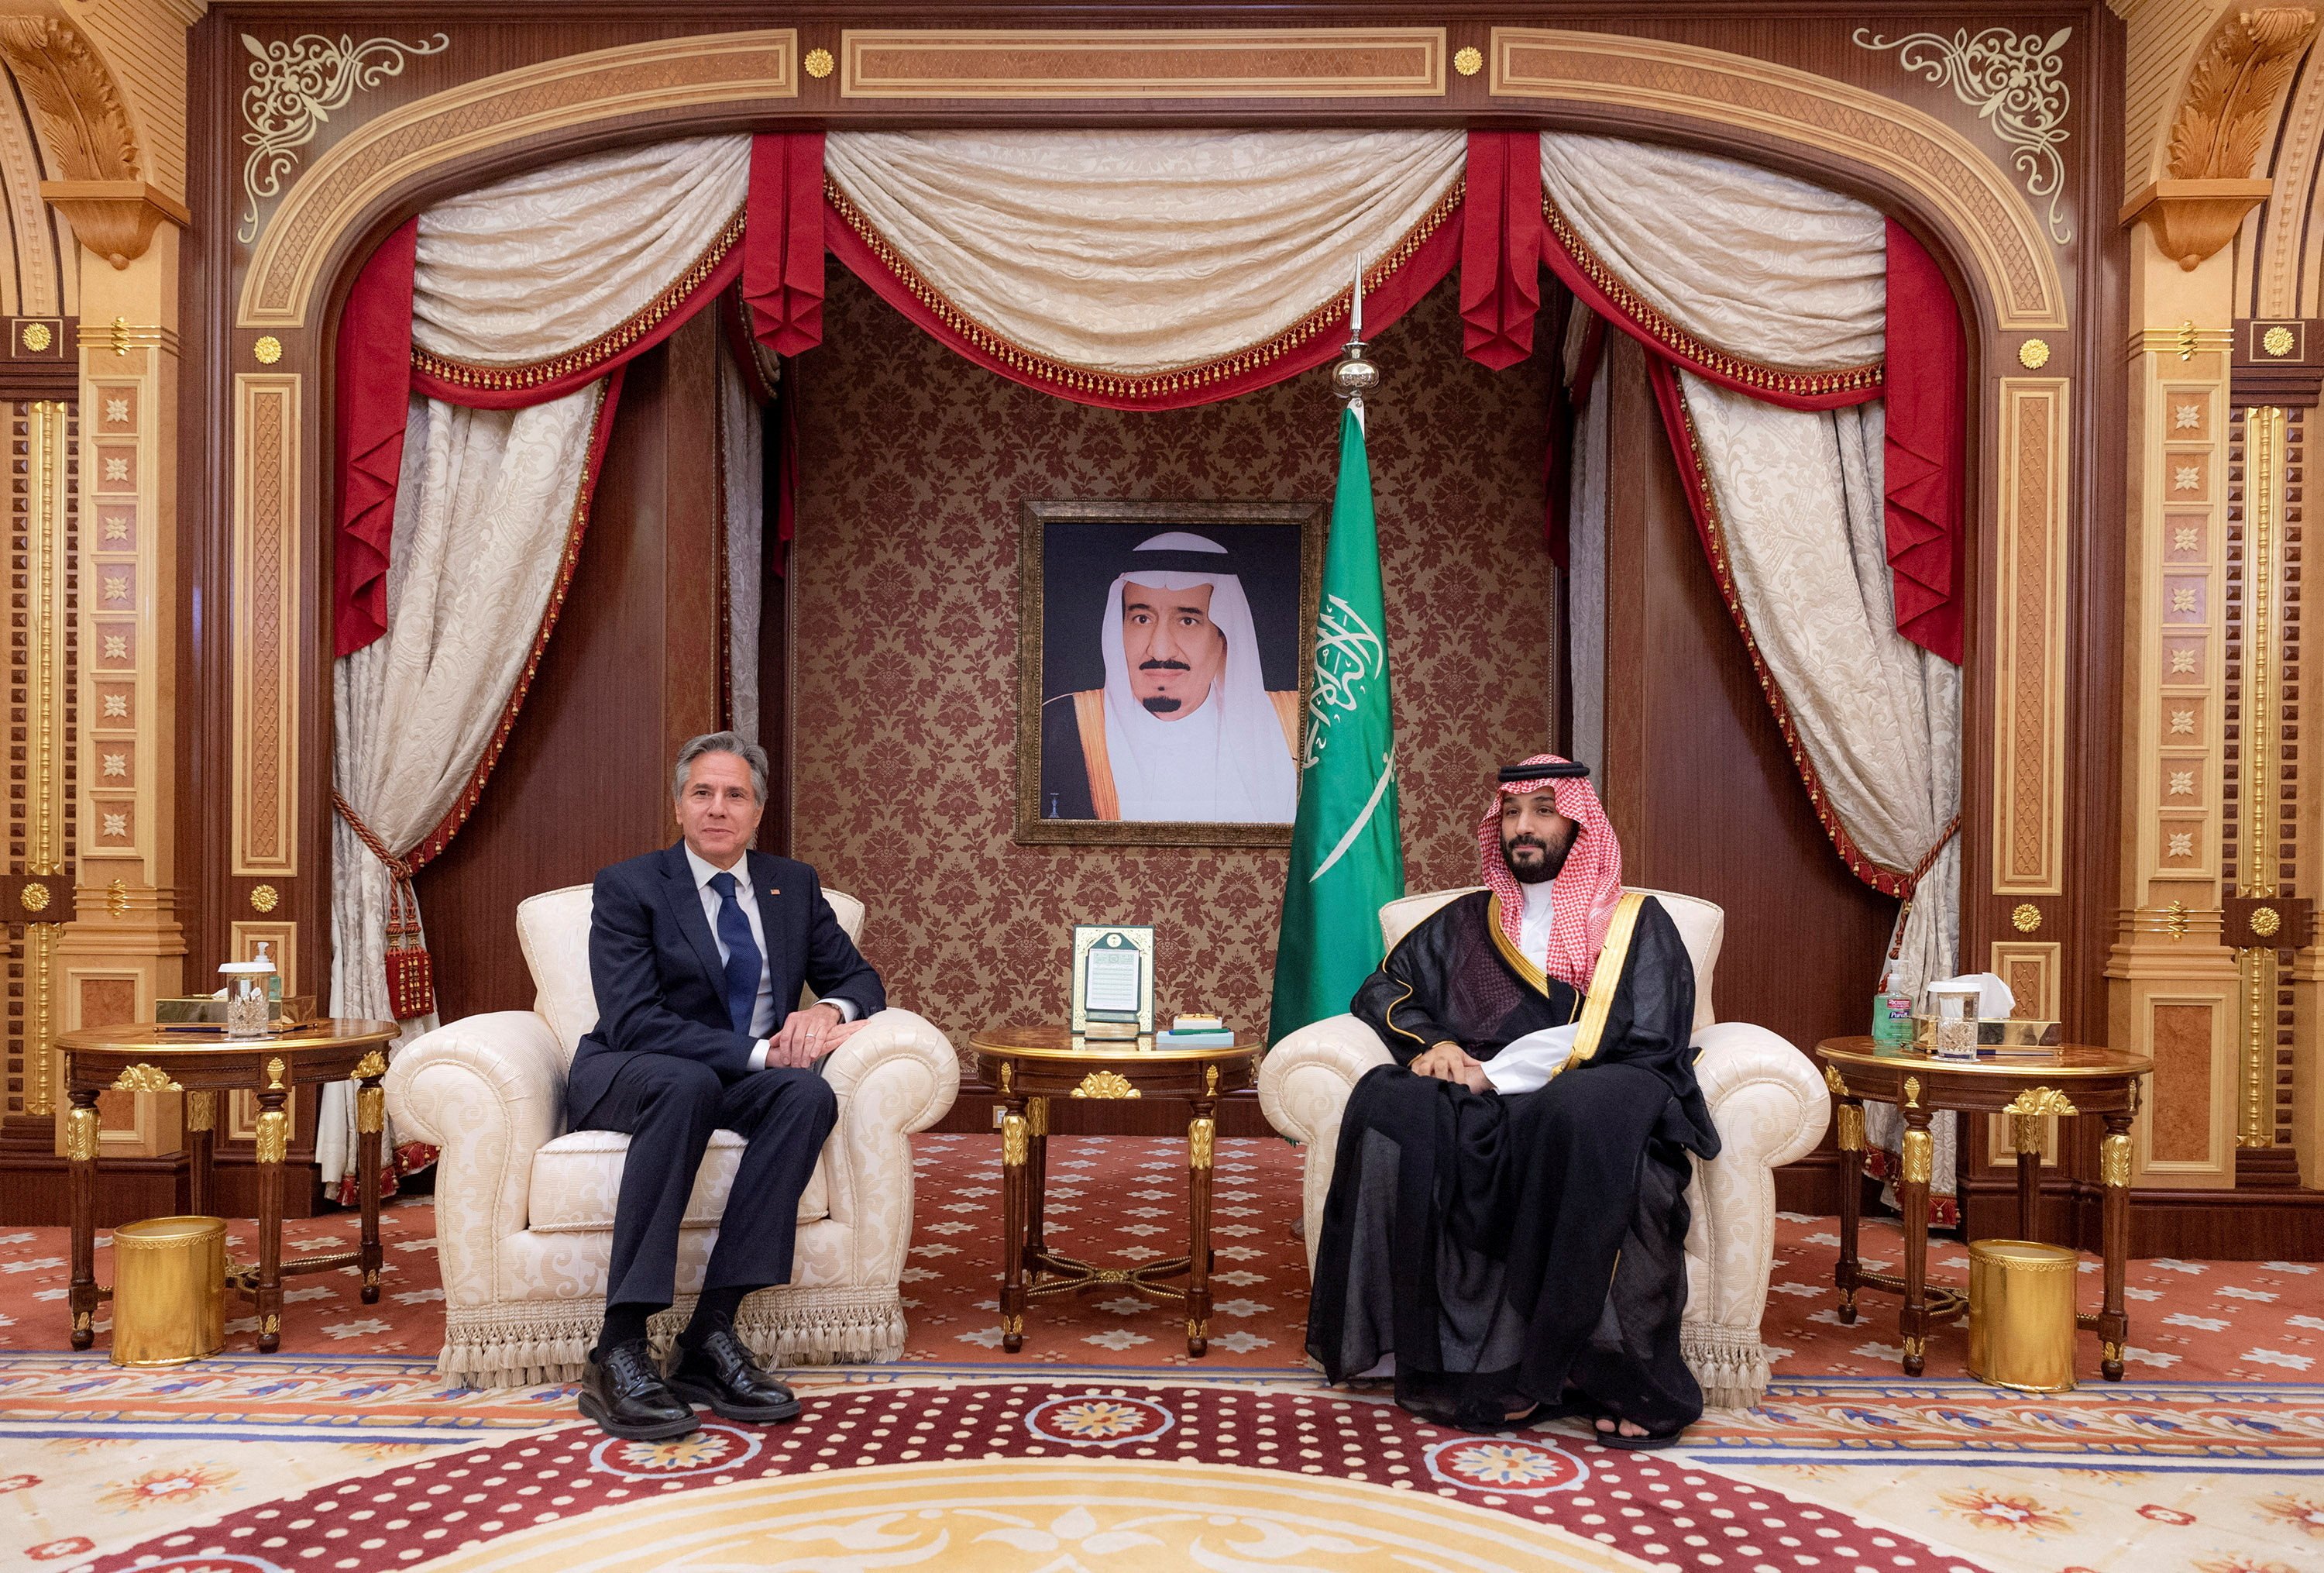 US Secretary of State Antony Blinken meets with Saudi Crown Prince Mohammed bin Salman in Jeddah, Saudi Arabia. Photo: Saudi Royal Court via Reuters